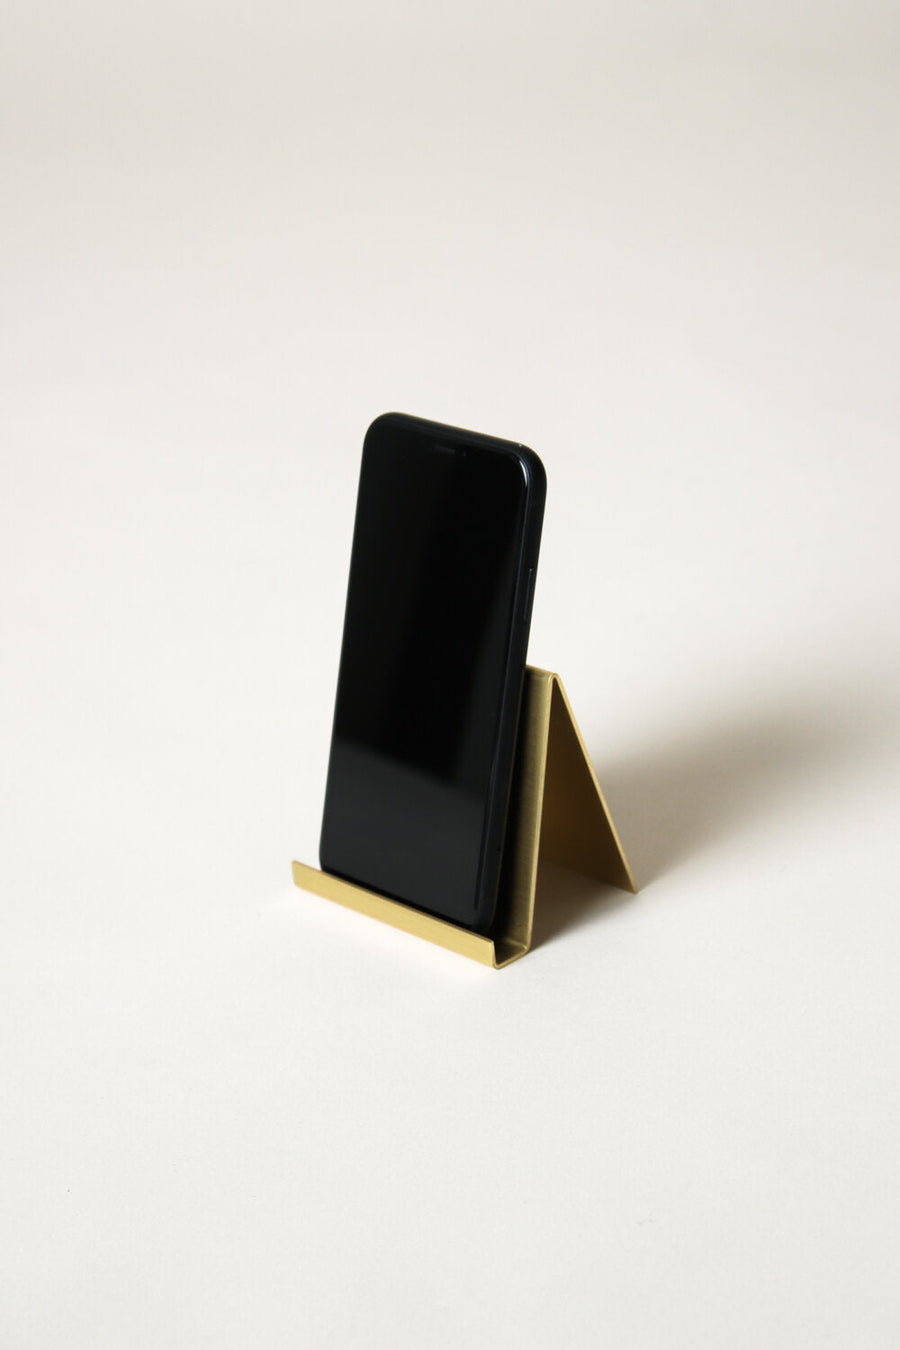 Crease Phone Holder Sample - Aged Brass